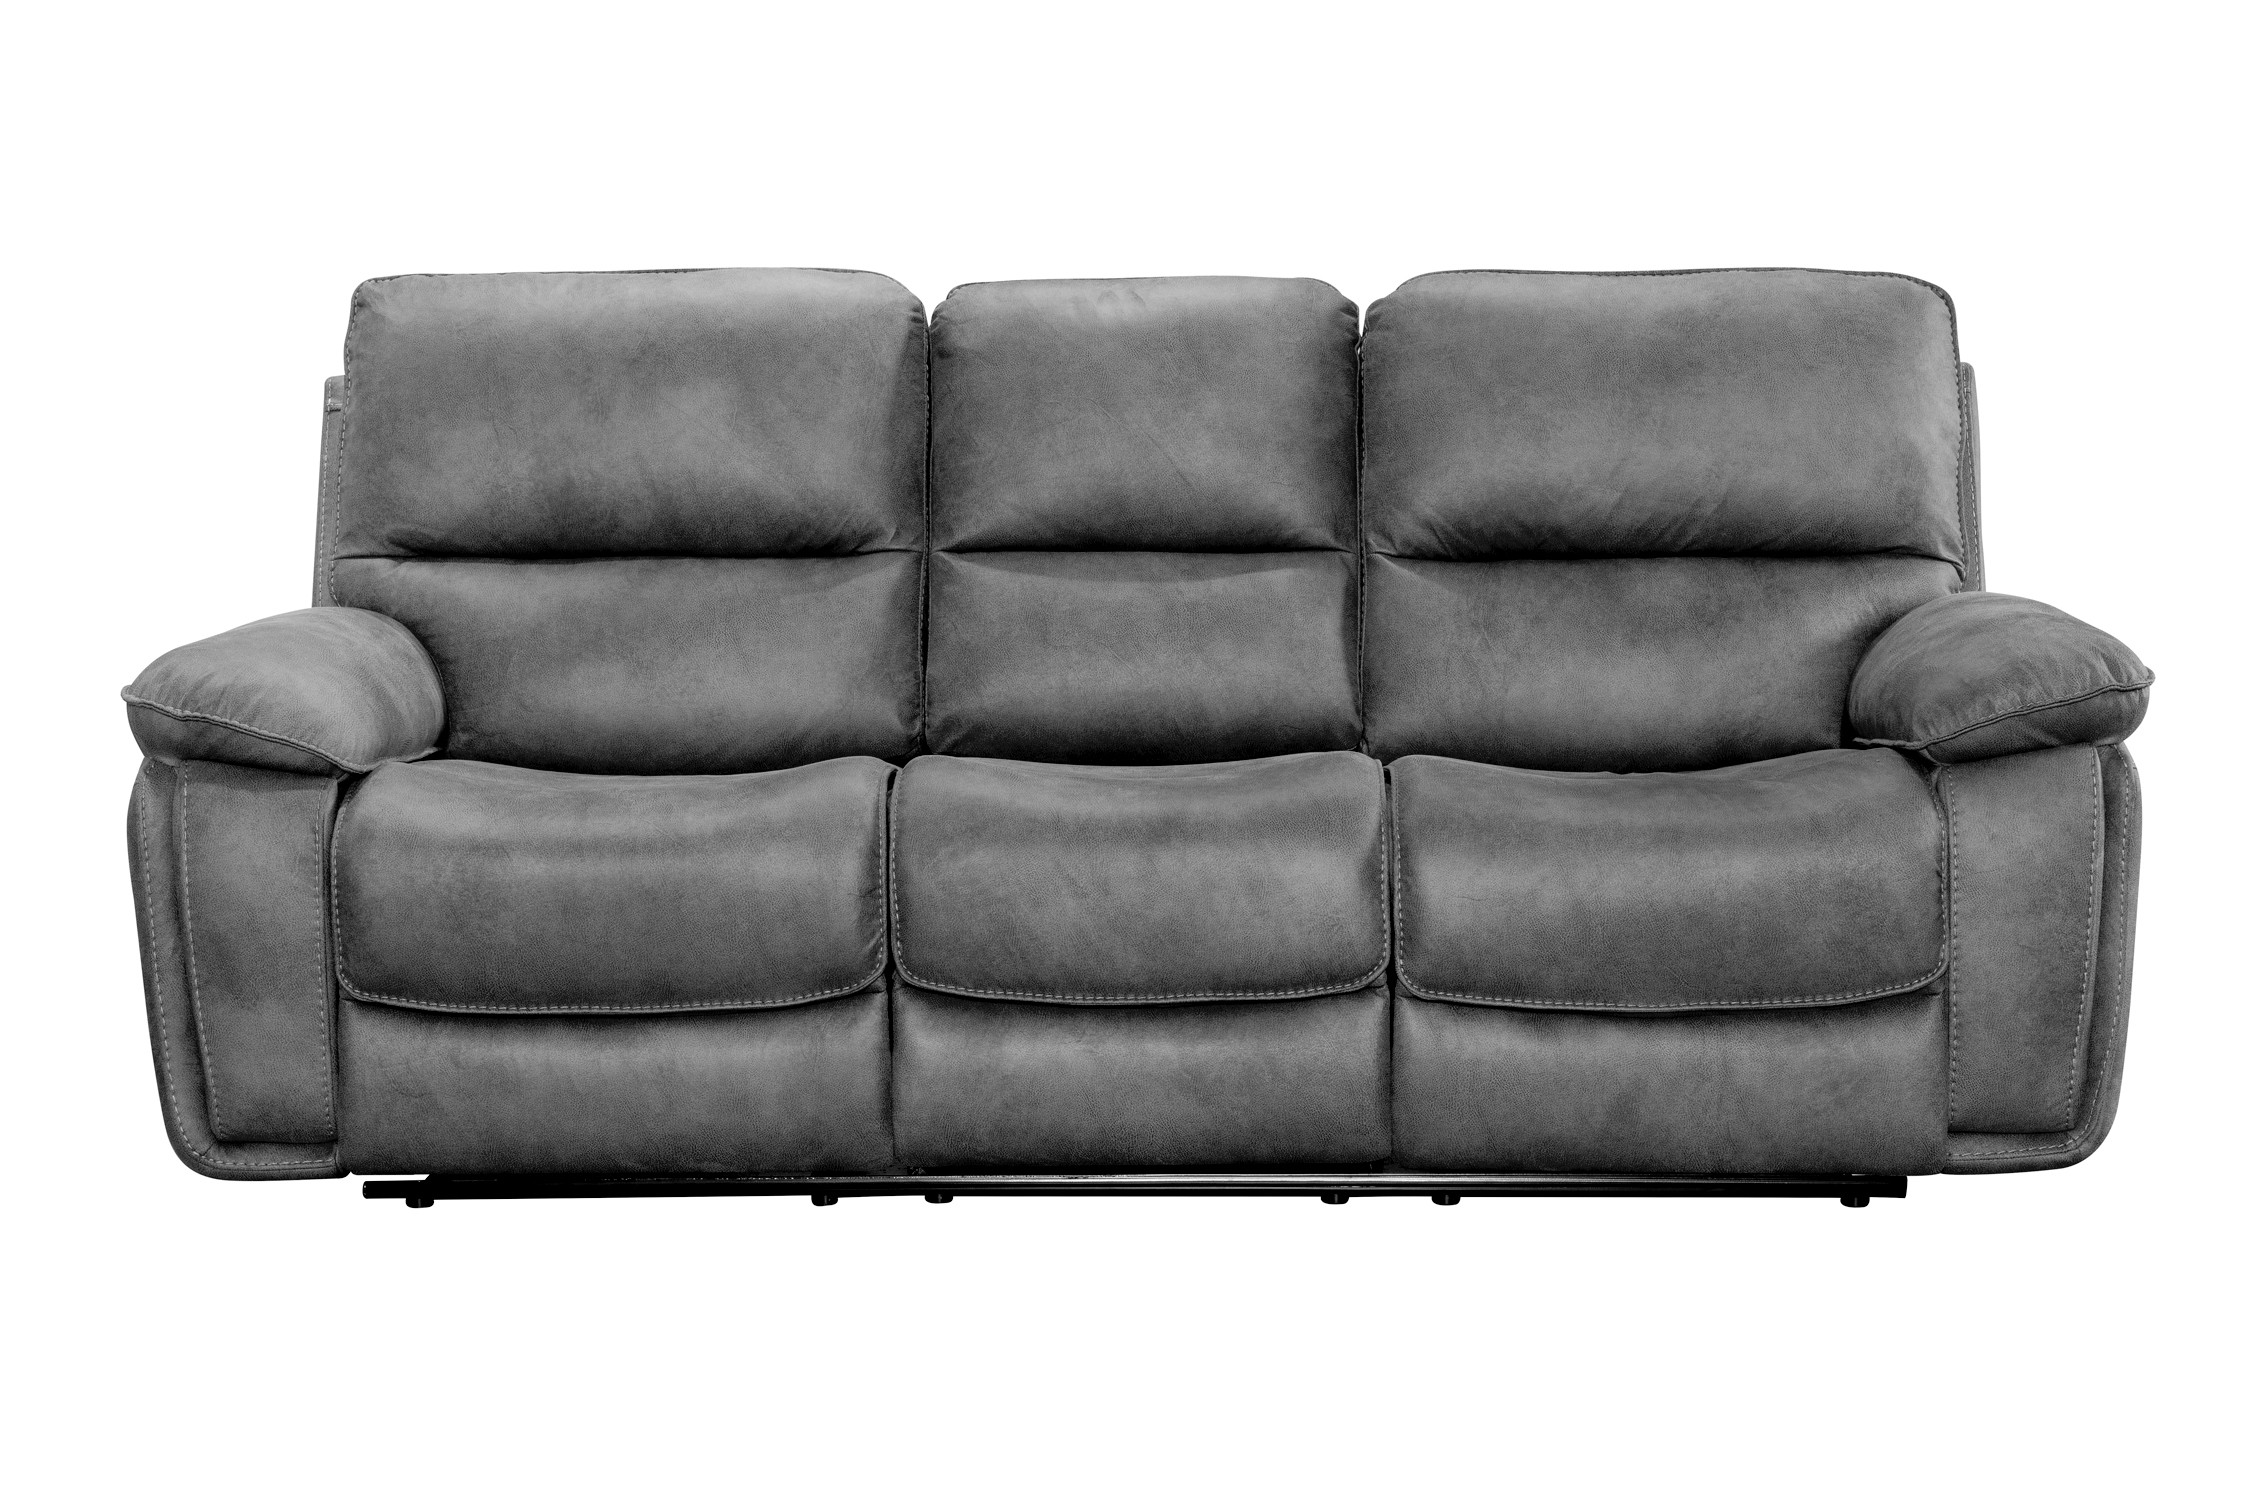 Monzo 3 seater manual recliner sofa